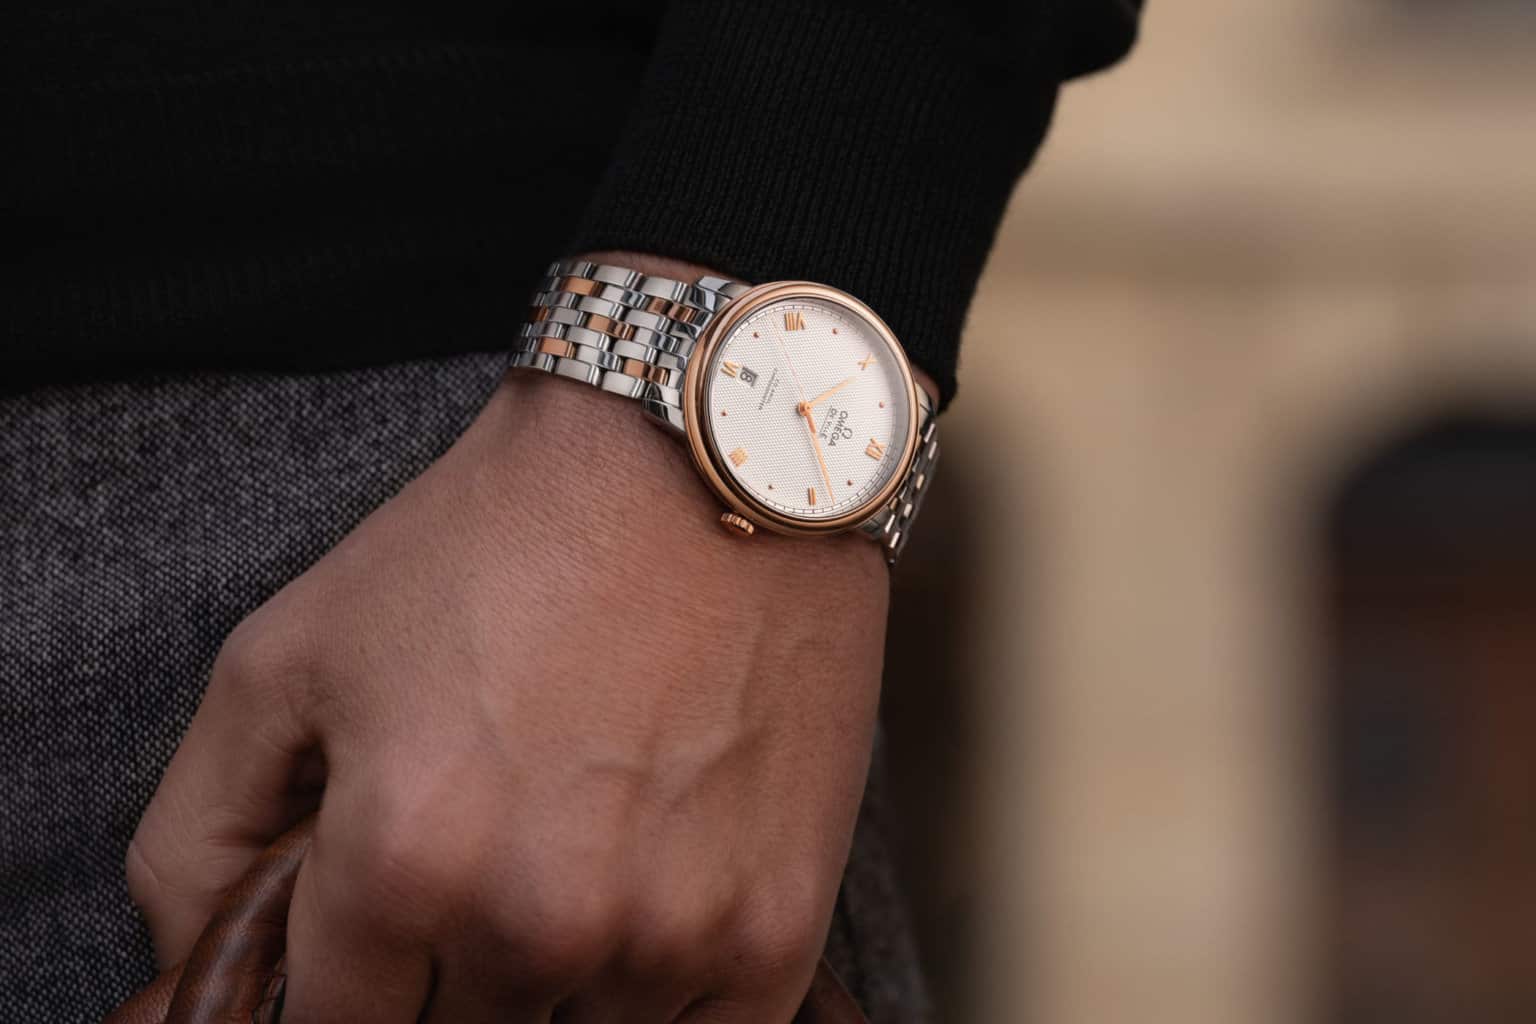 III. Factors to Consider When Choosing a Luxury Watch